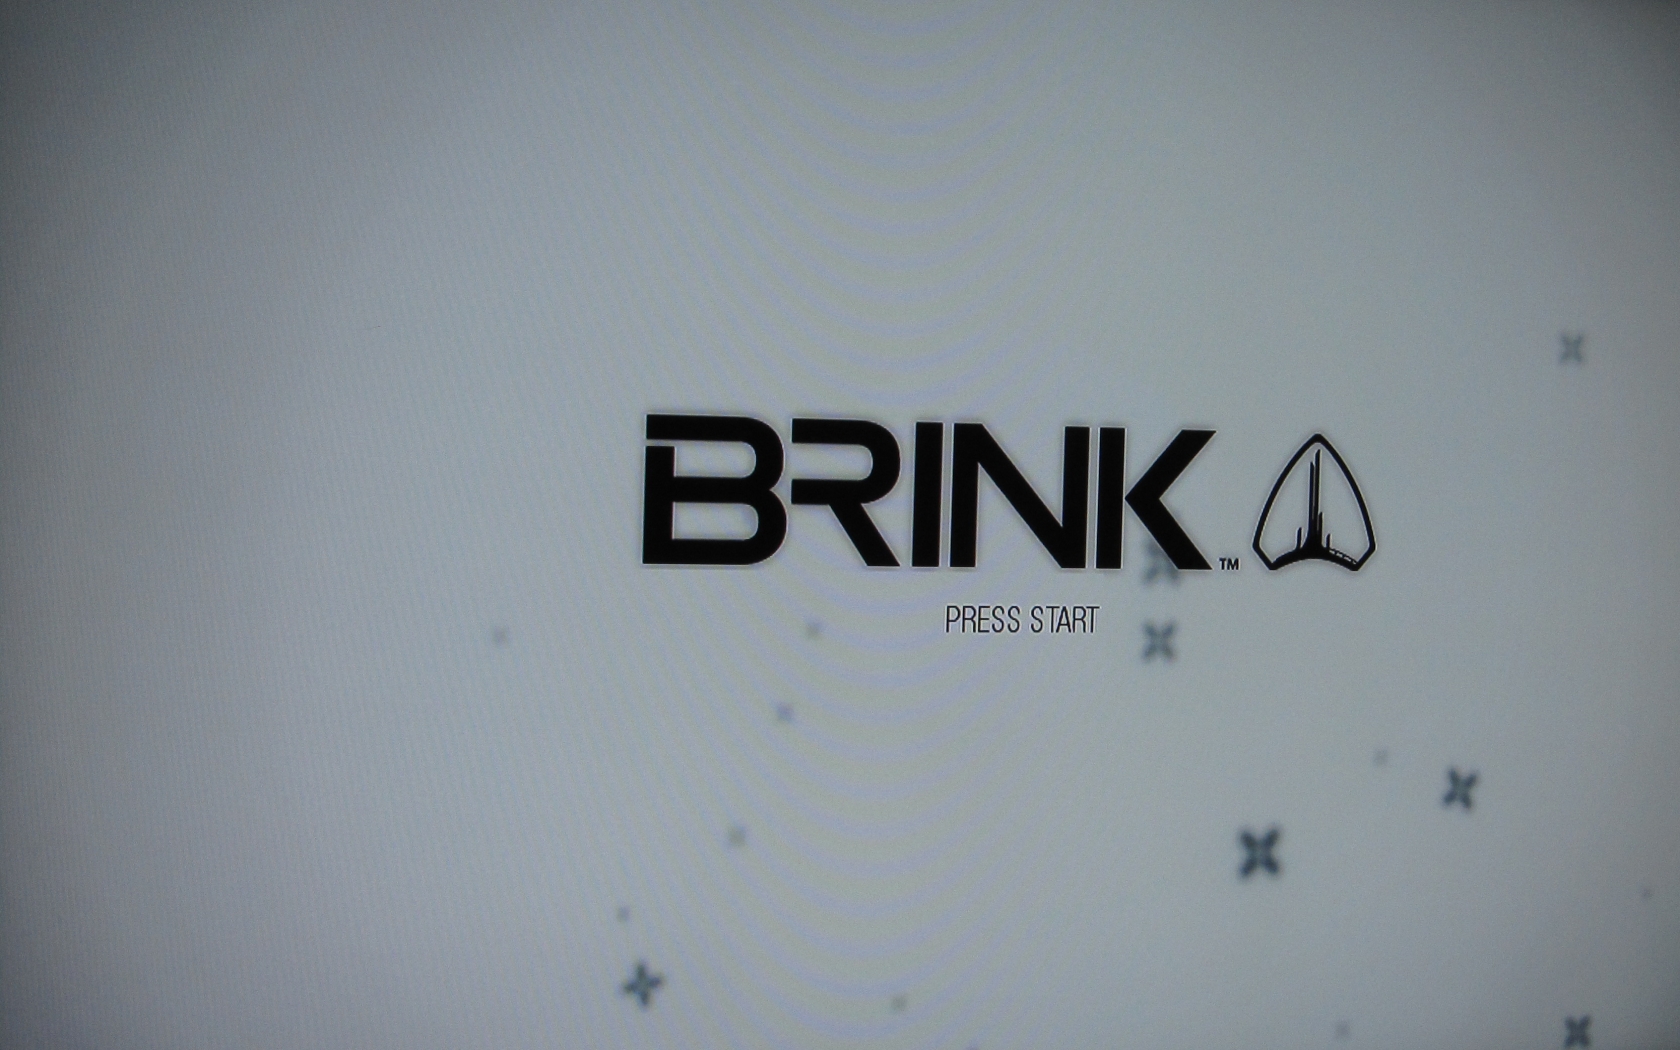 Download the Brink Wallpaper, Brink iPhone Wallpaper, Brink ...